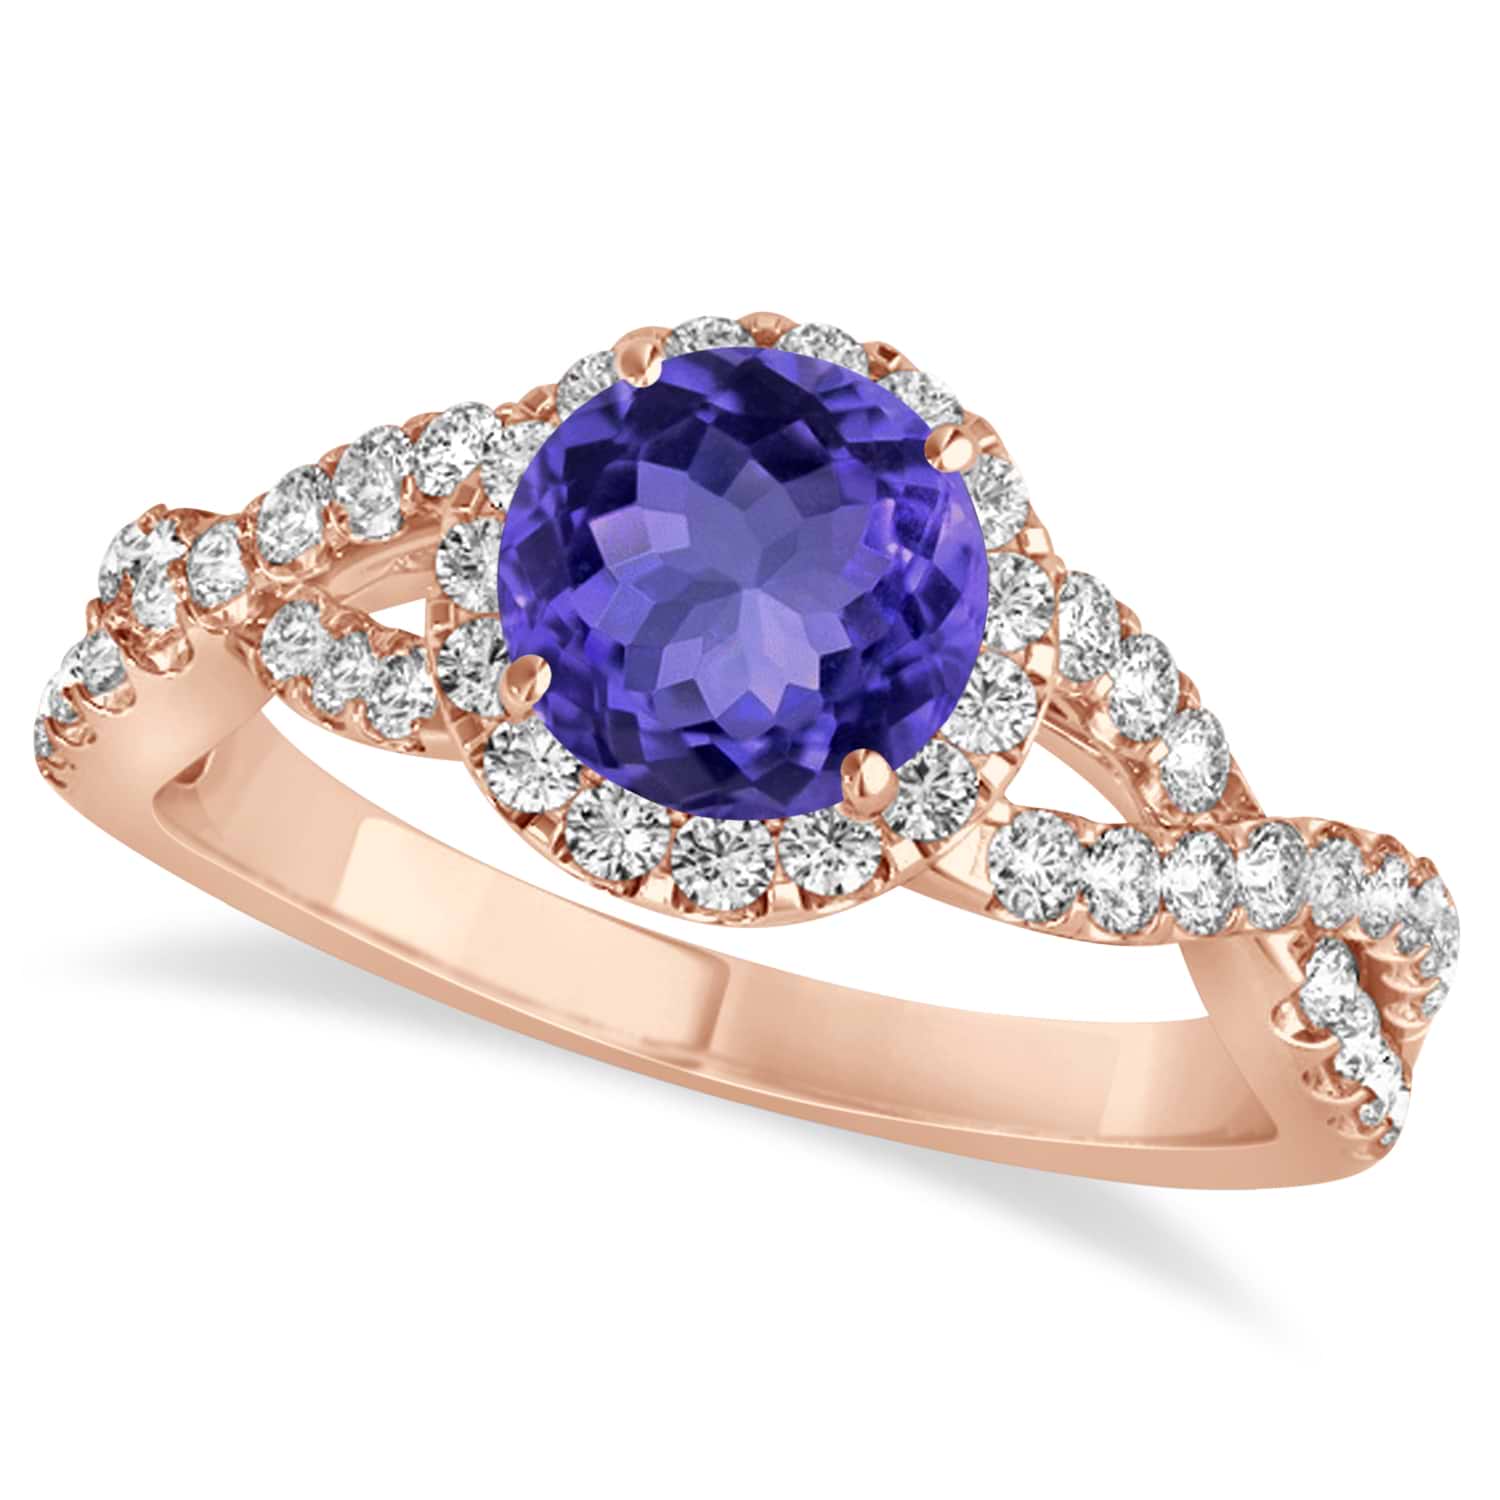 Tanzanite & Diamond Twisted Engagement Ring 14k Rose Gold 1.55ct